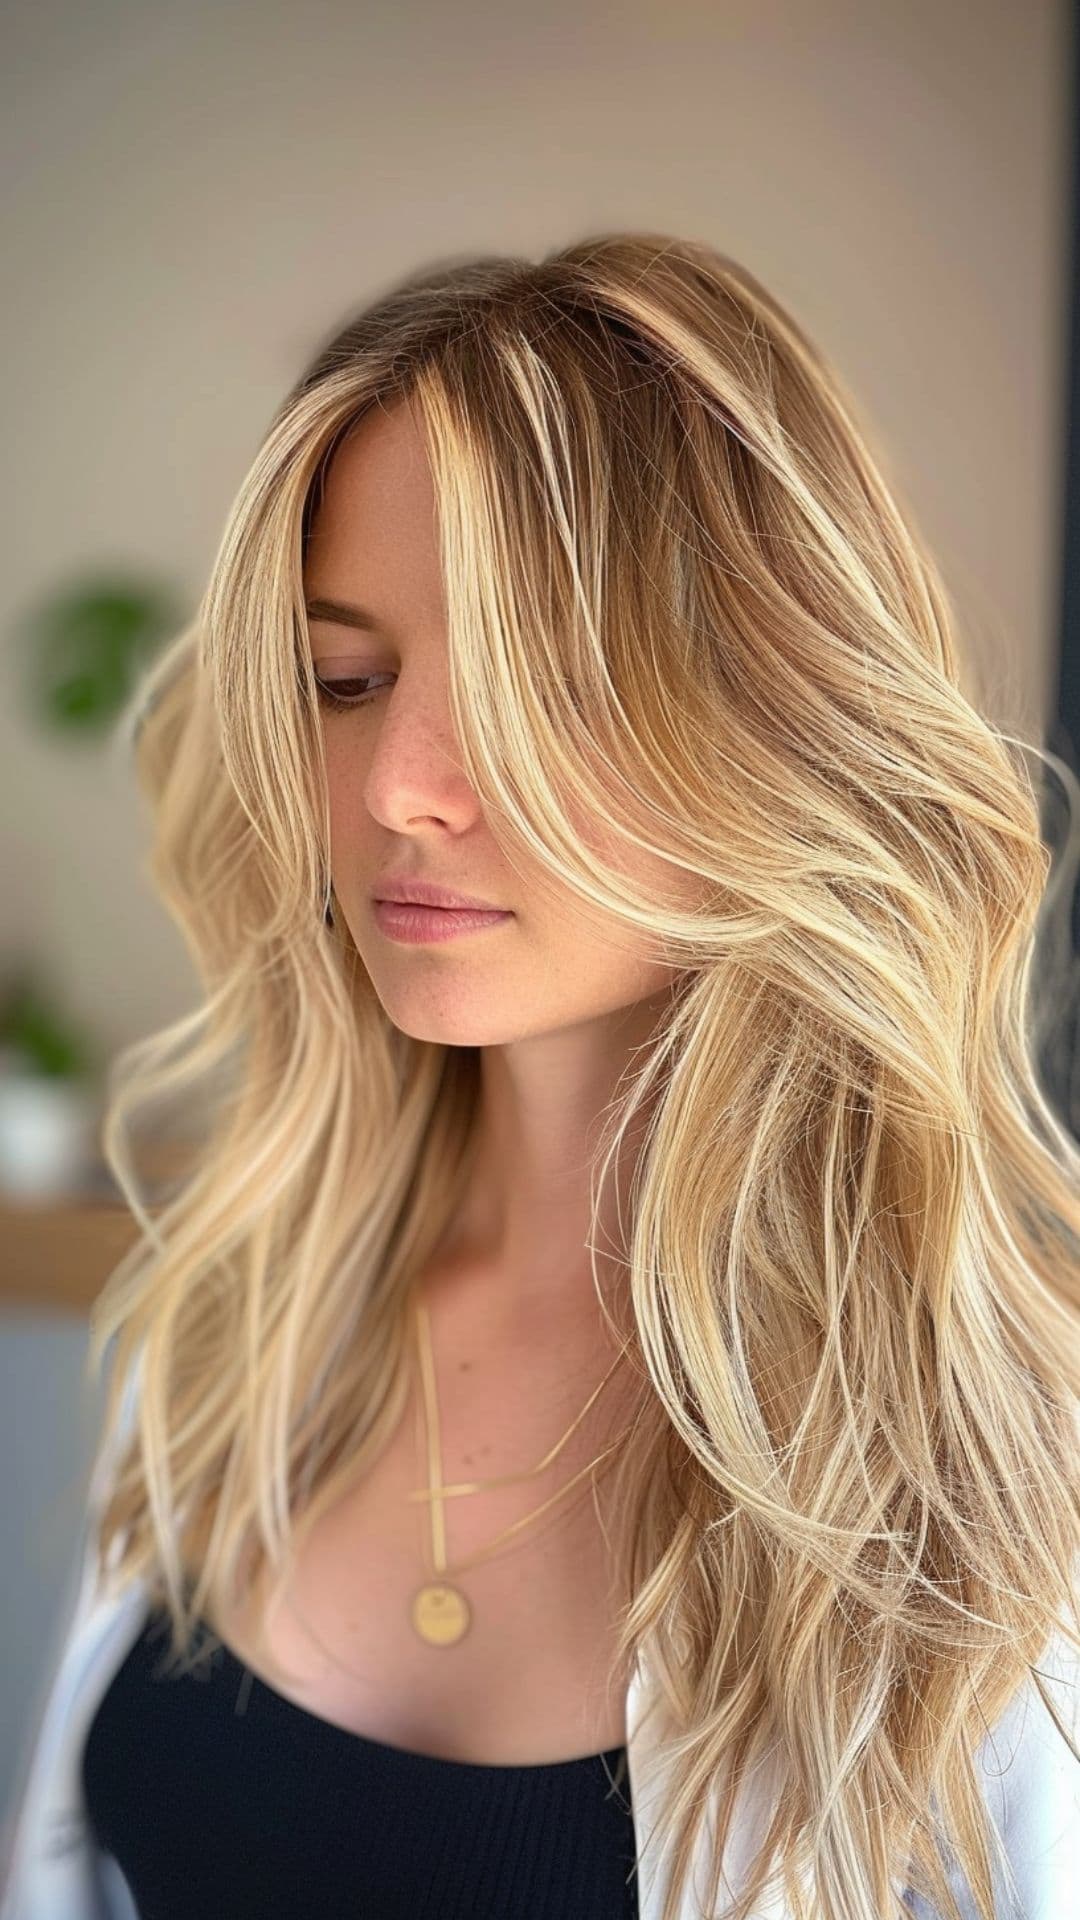 A woman modelling a honey blonde hair.